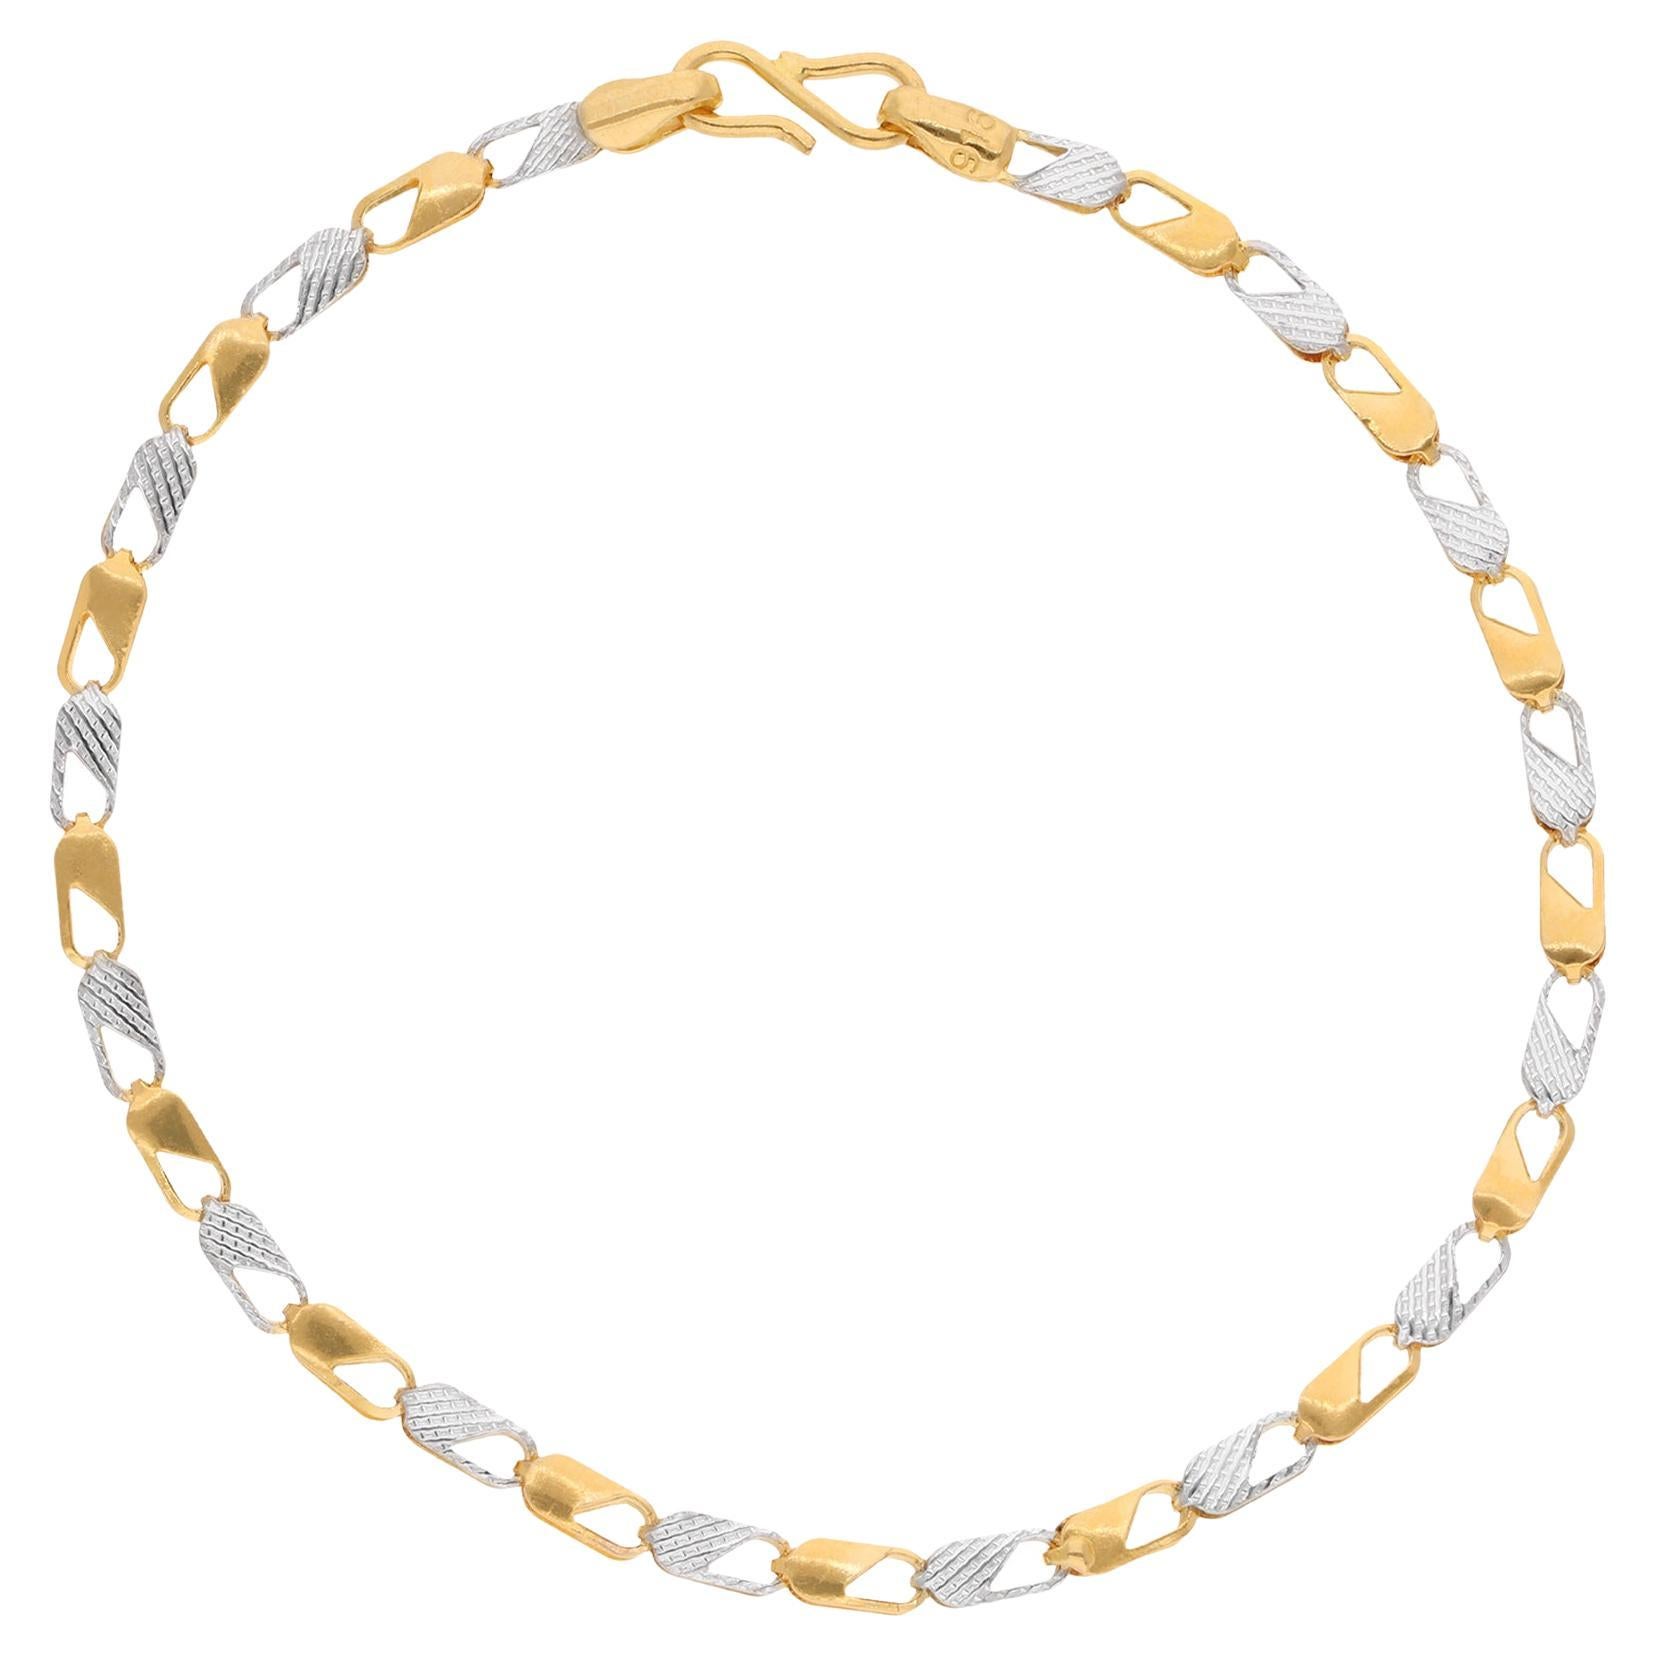 22 Karat Solid White Yellow Gold Lobster Clasp Design Bracelet Handmade Jewelry